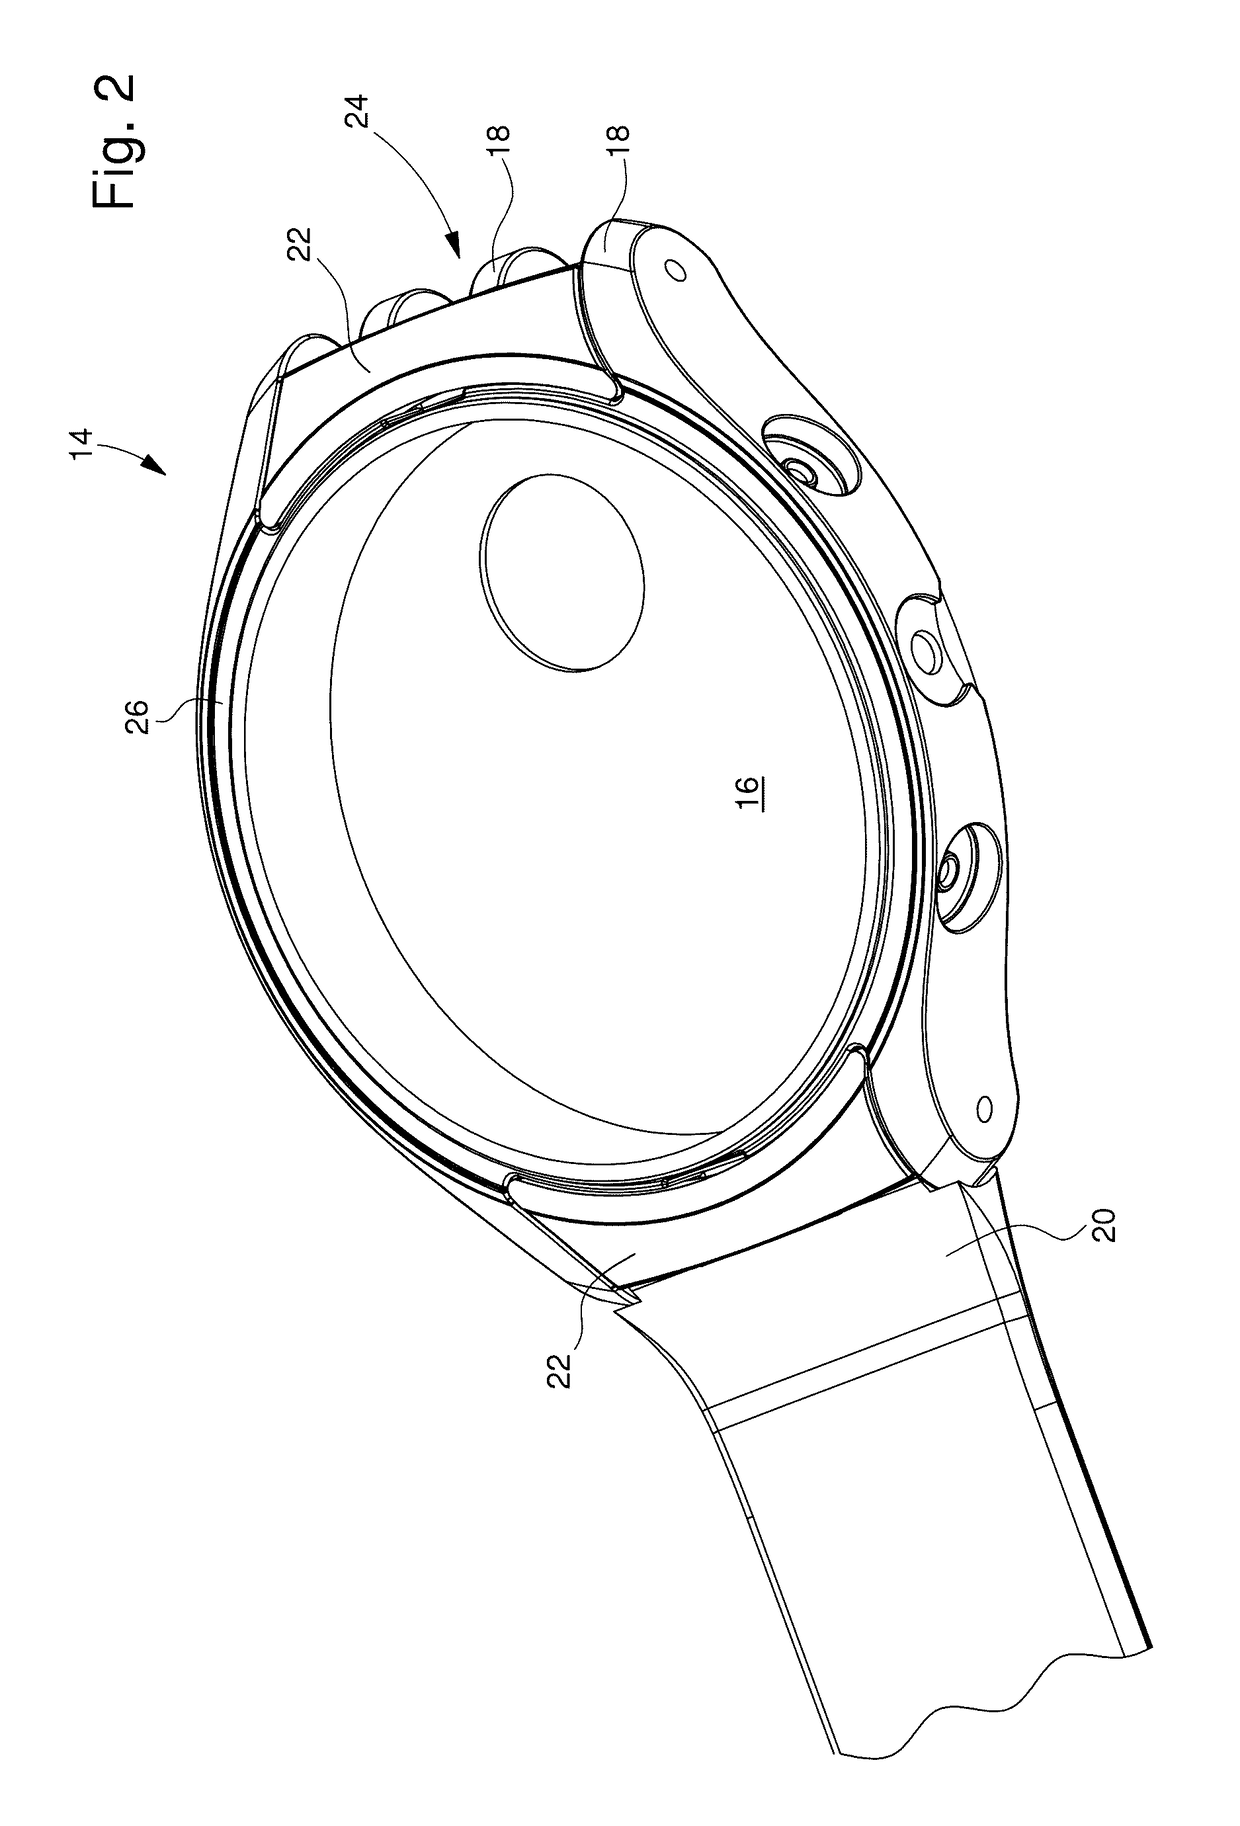 Exterior element for a wristwatch middle part